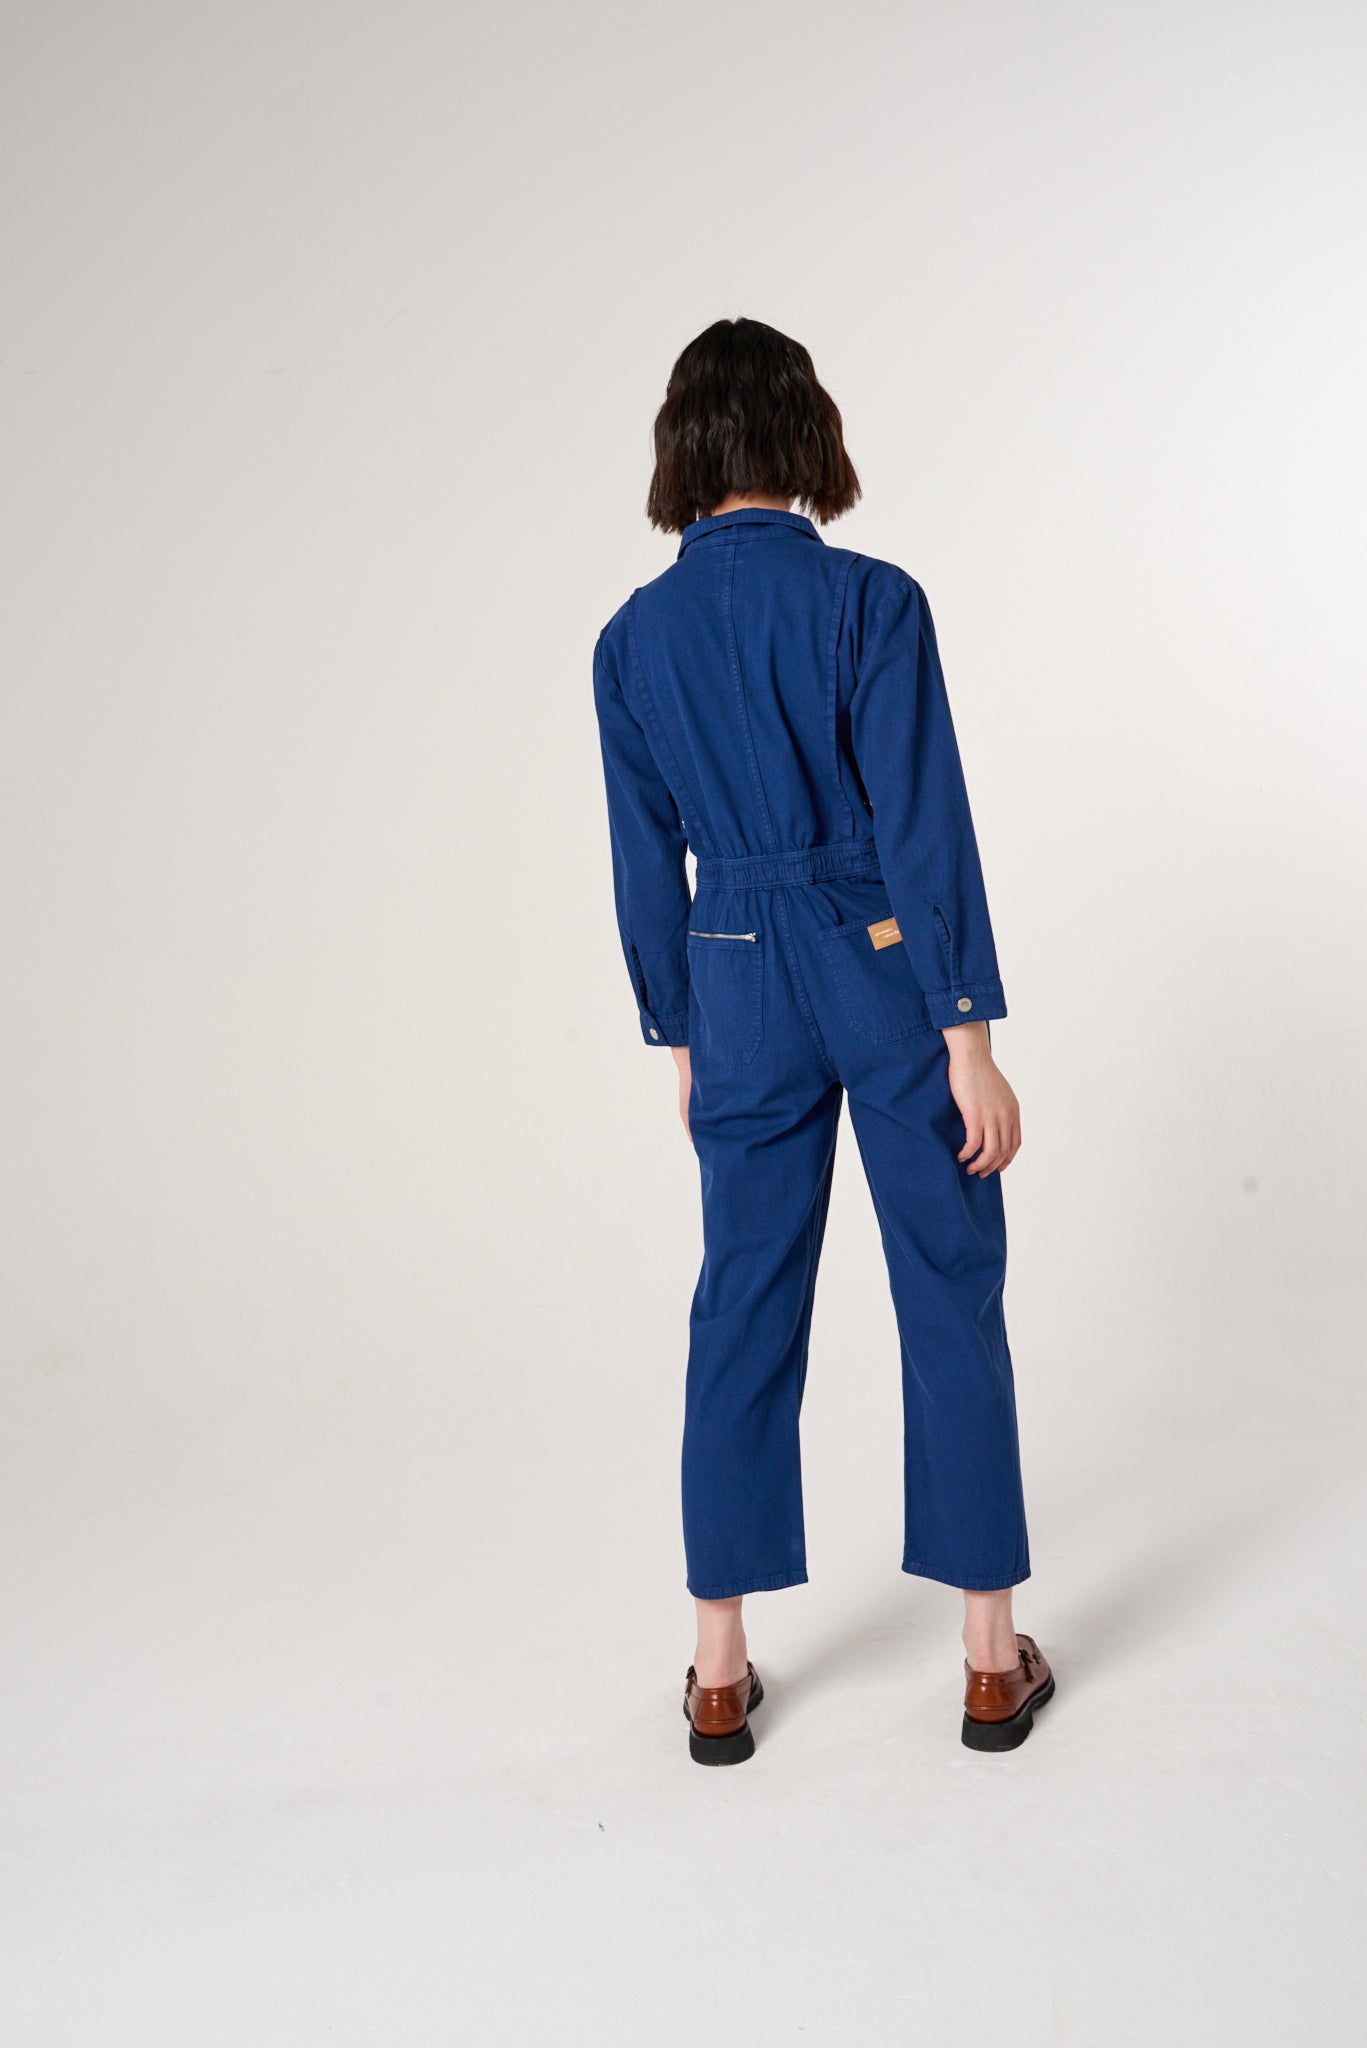 Indie Jumpsuit in Workwear Blue - seventy + mochi